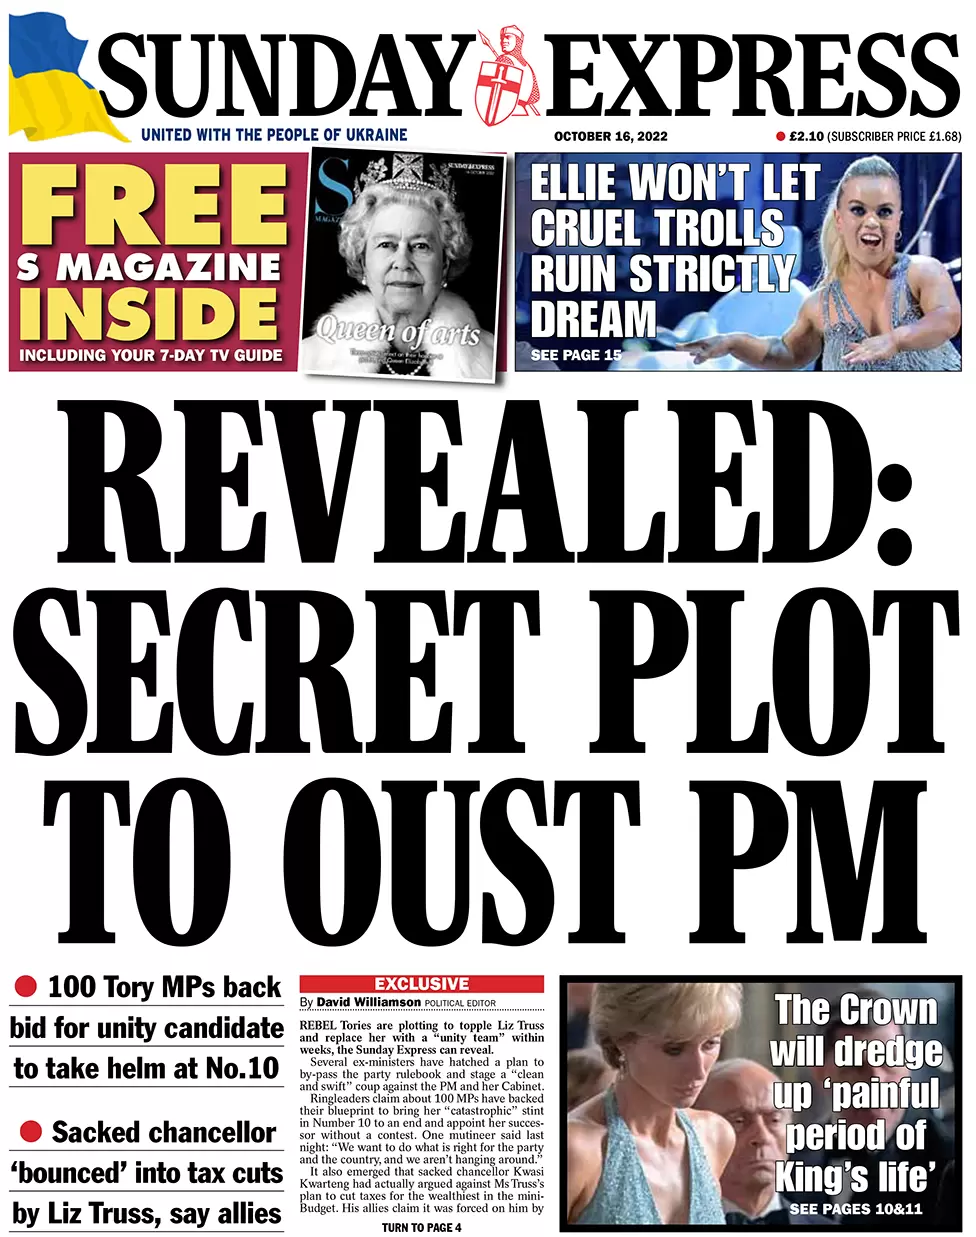 Sunday Express - Secret plot to oust PM Sunday Express - Secret plot to oust PM